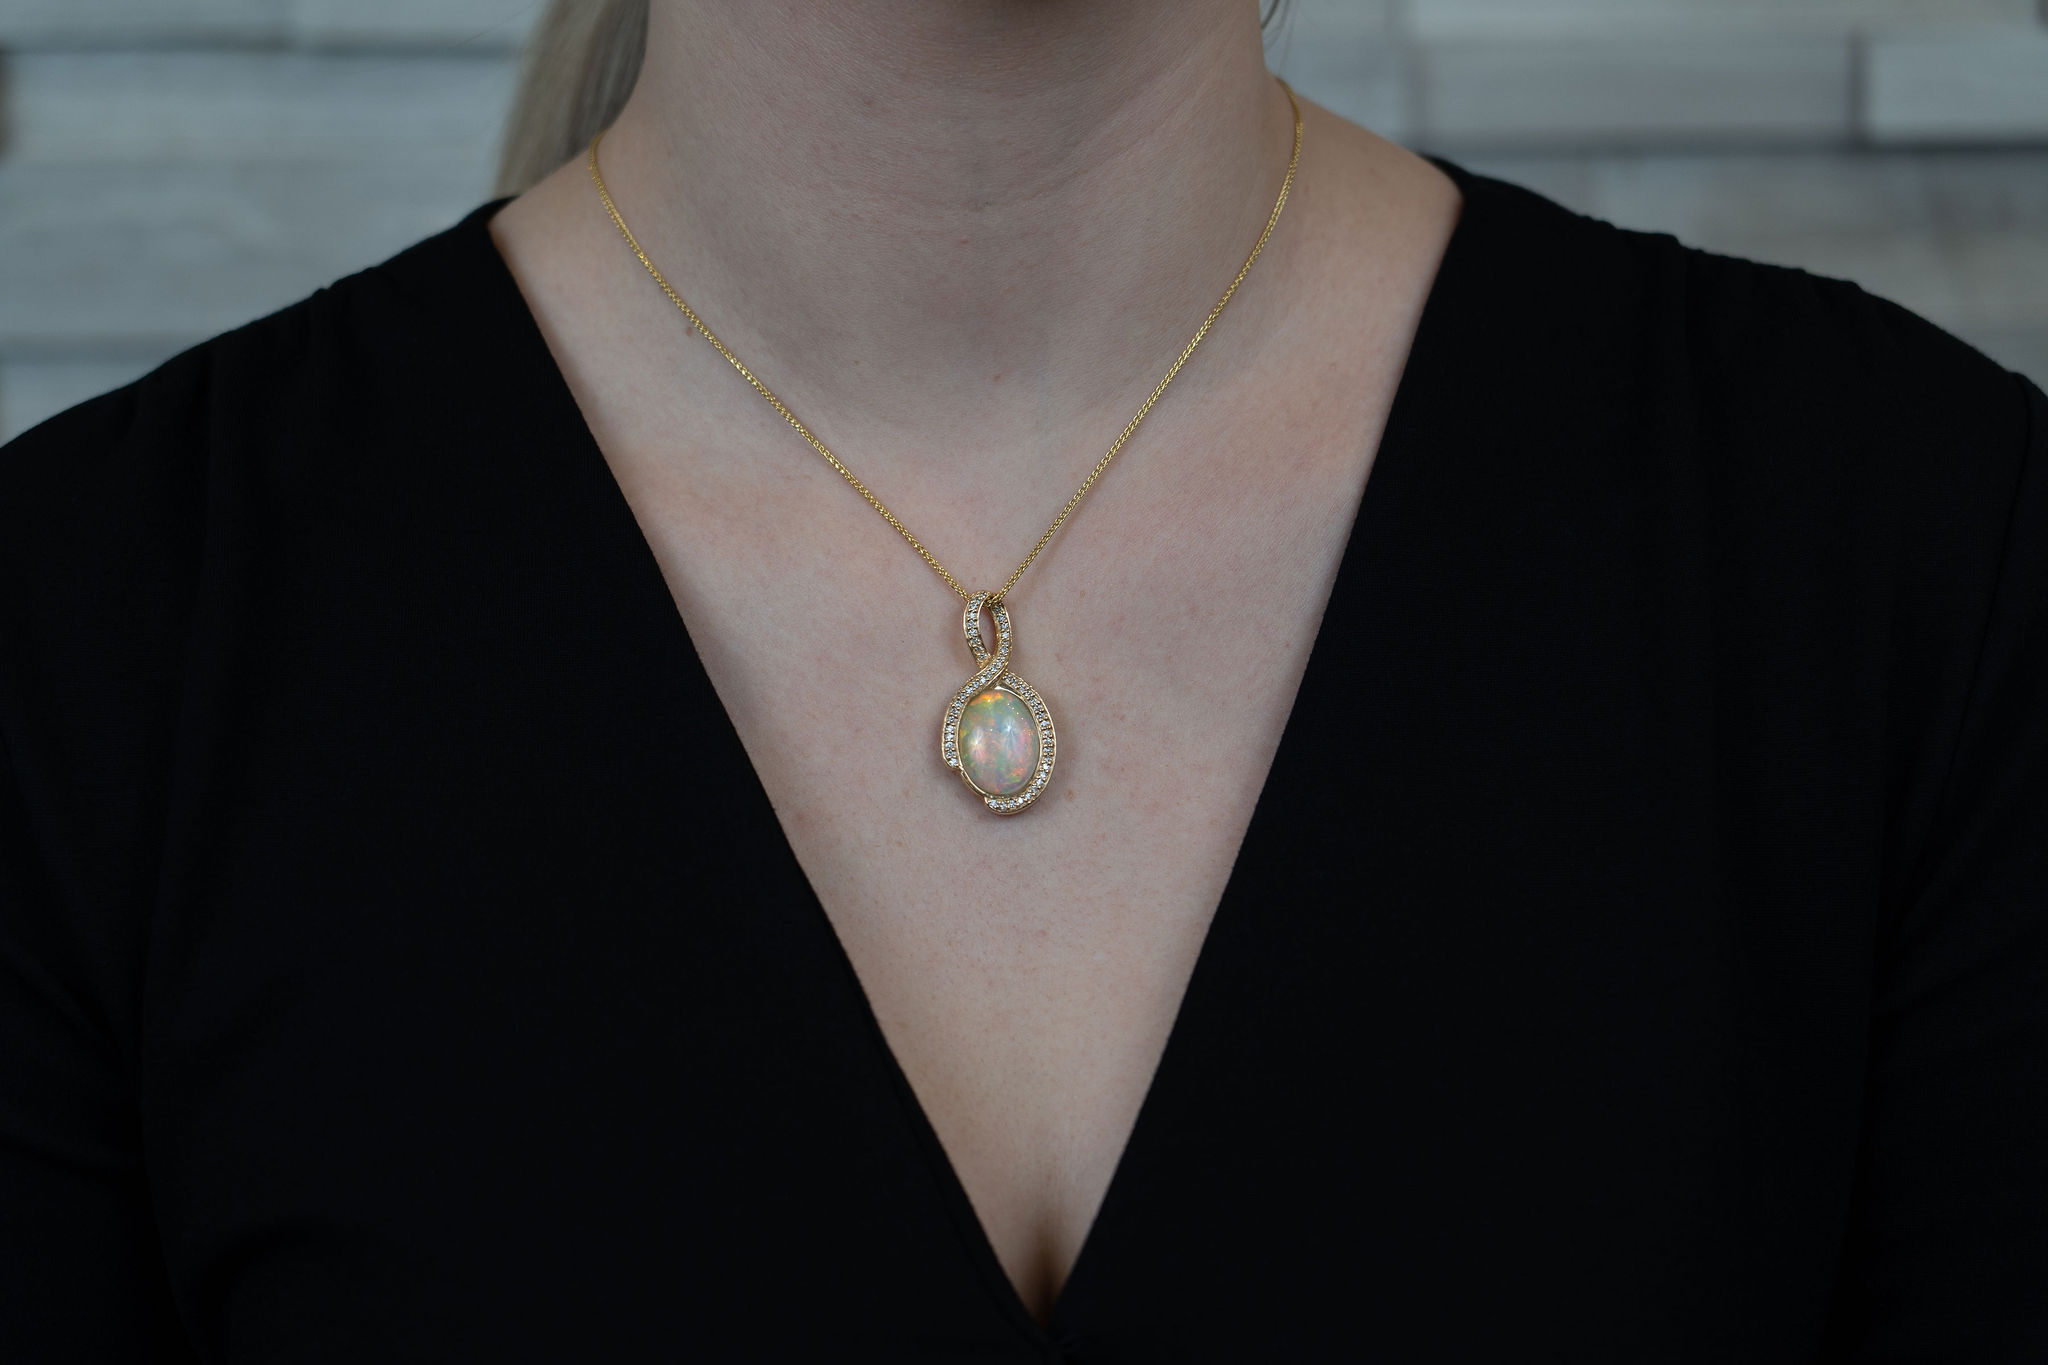 Jacob Matthew Jeweler's custom design - opal necklace